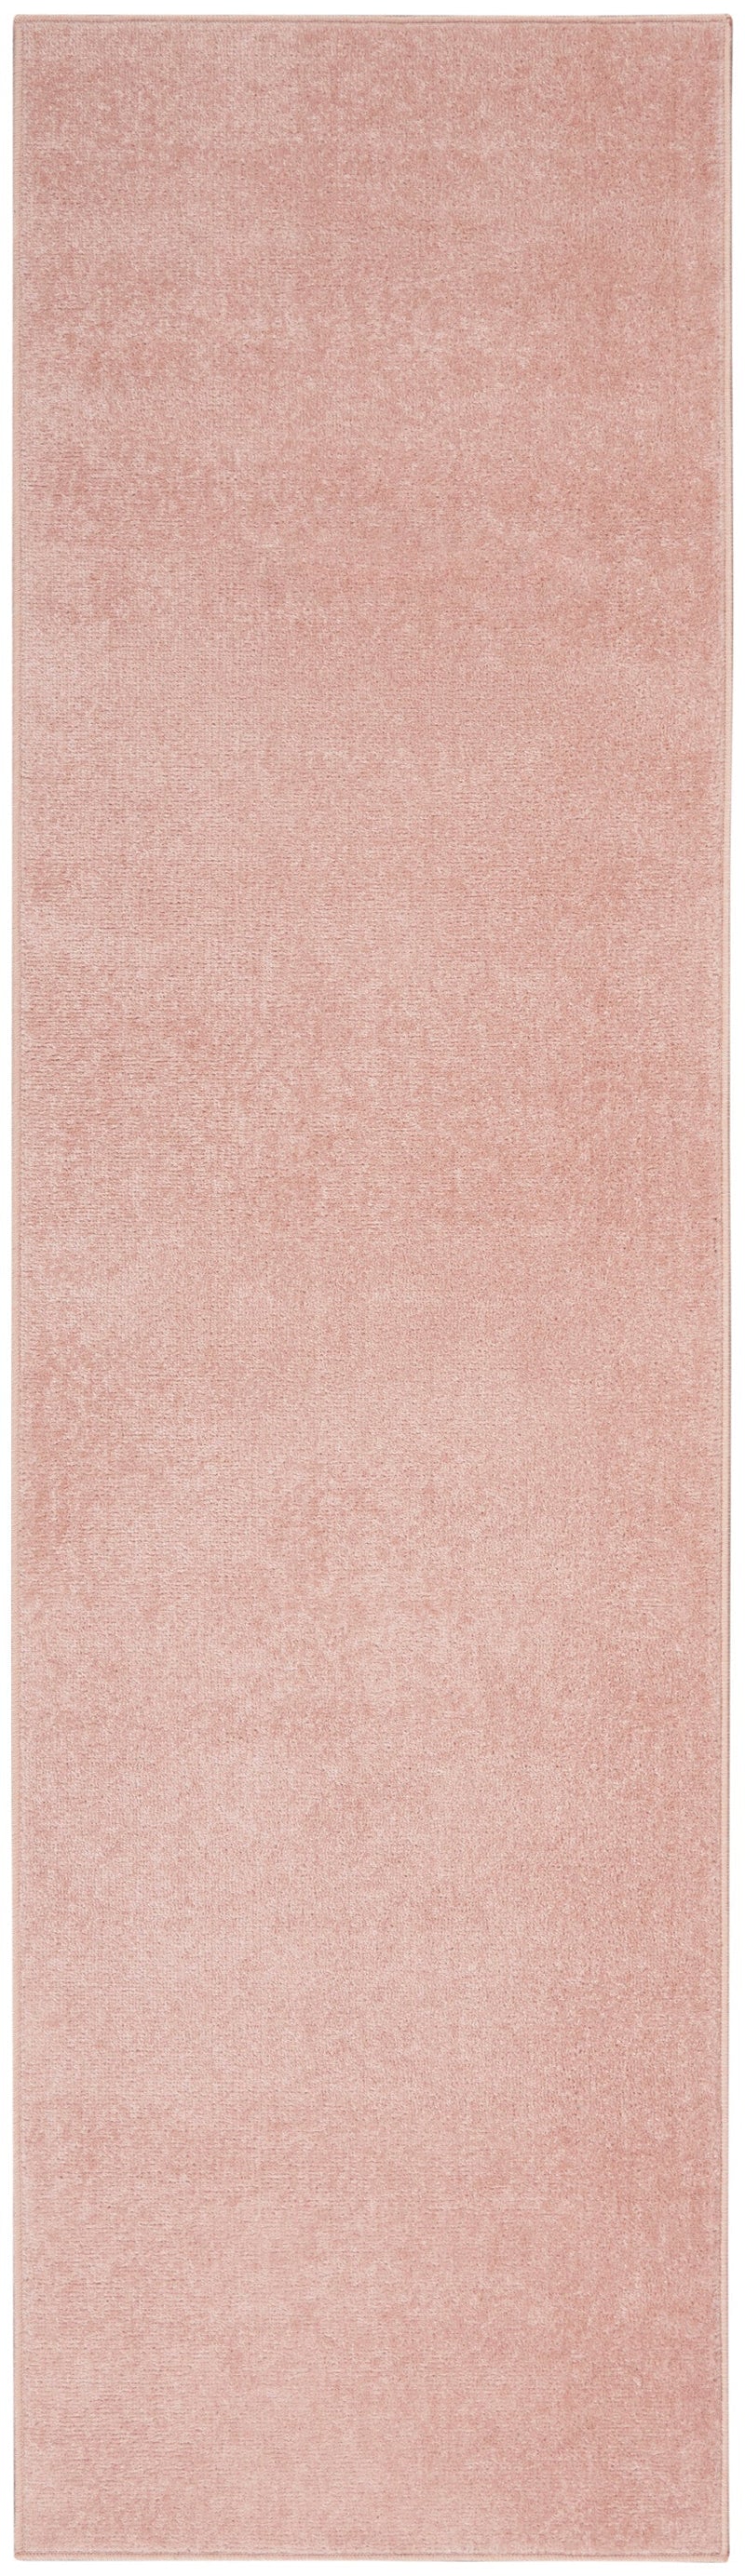 media image for nourison essentials pink rug by nourison 99446824776 redo 4 263